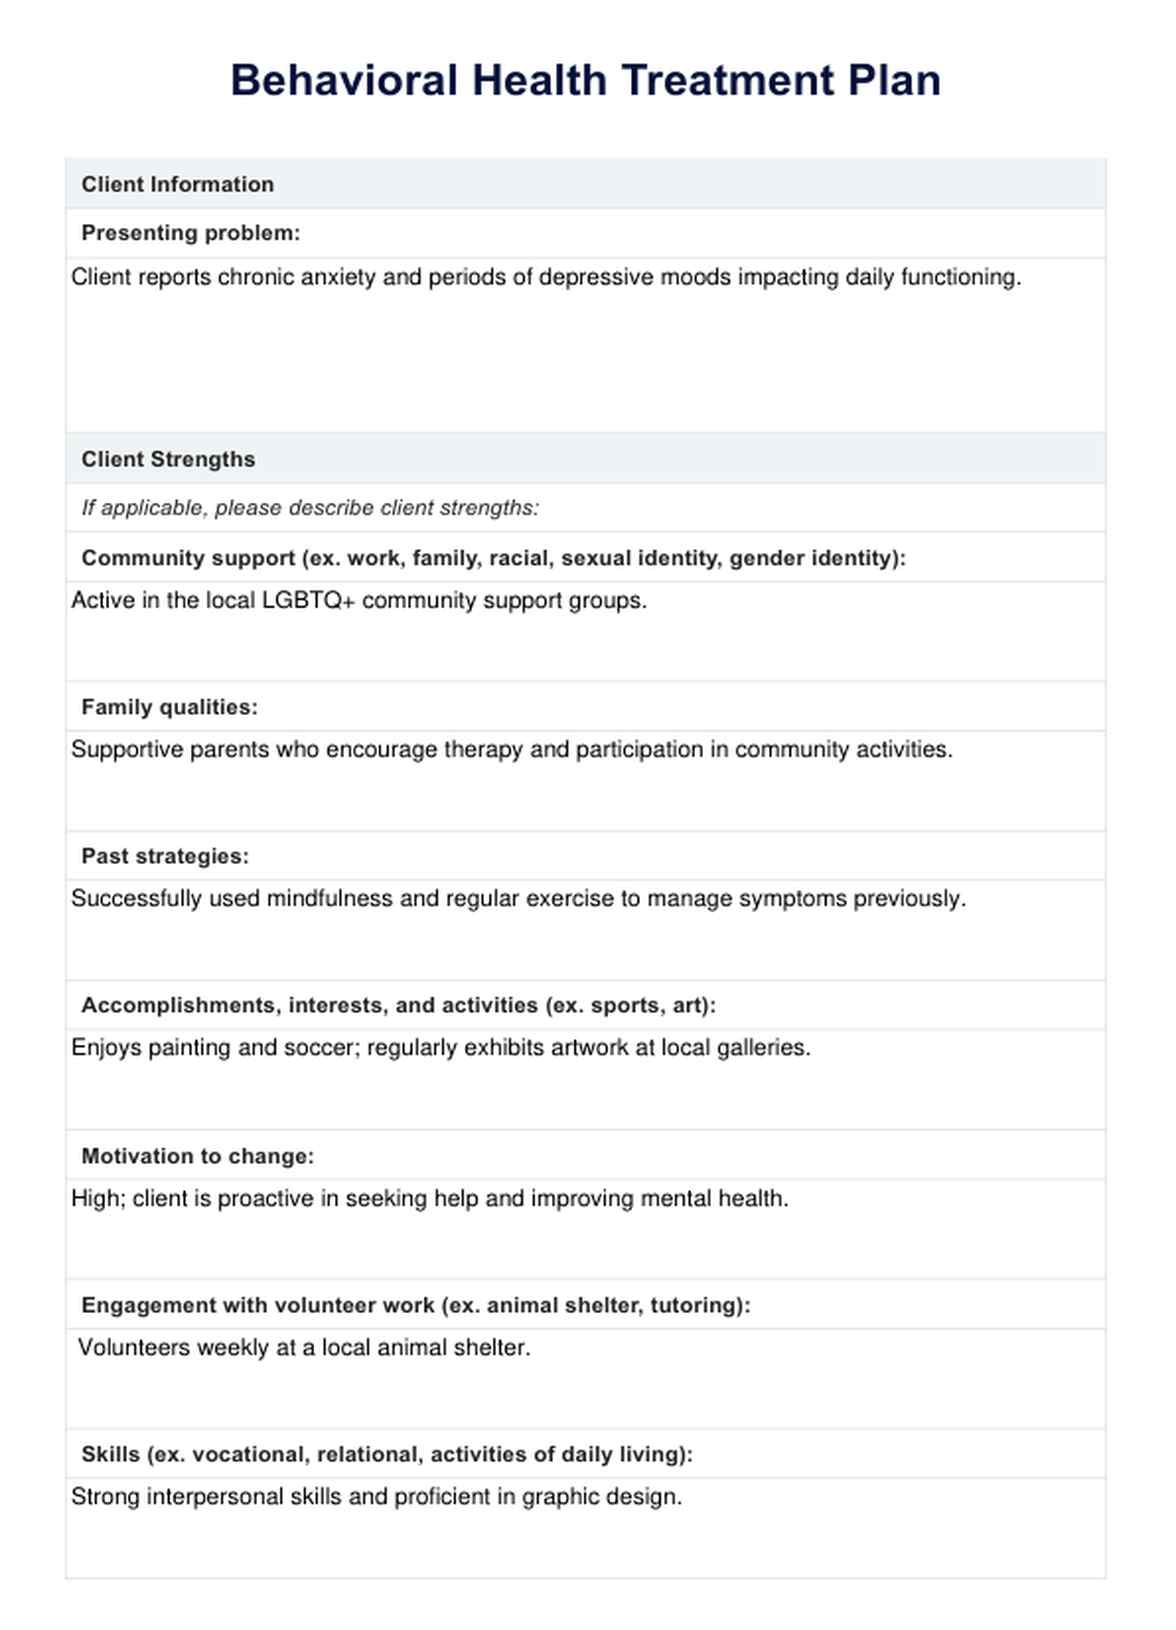 Behavioral Health Treatment Plan PDF Example